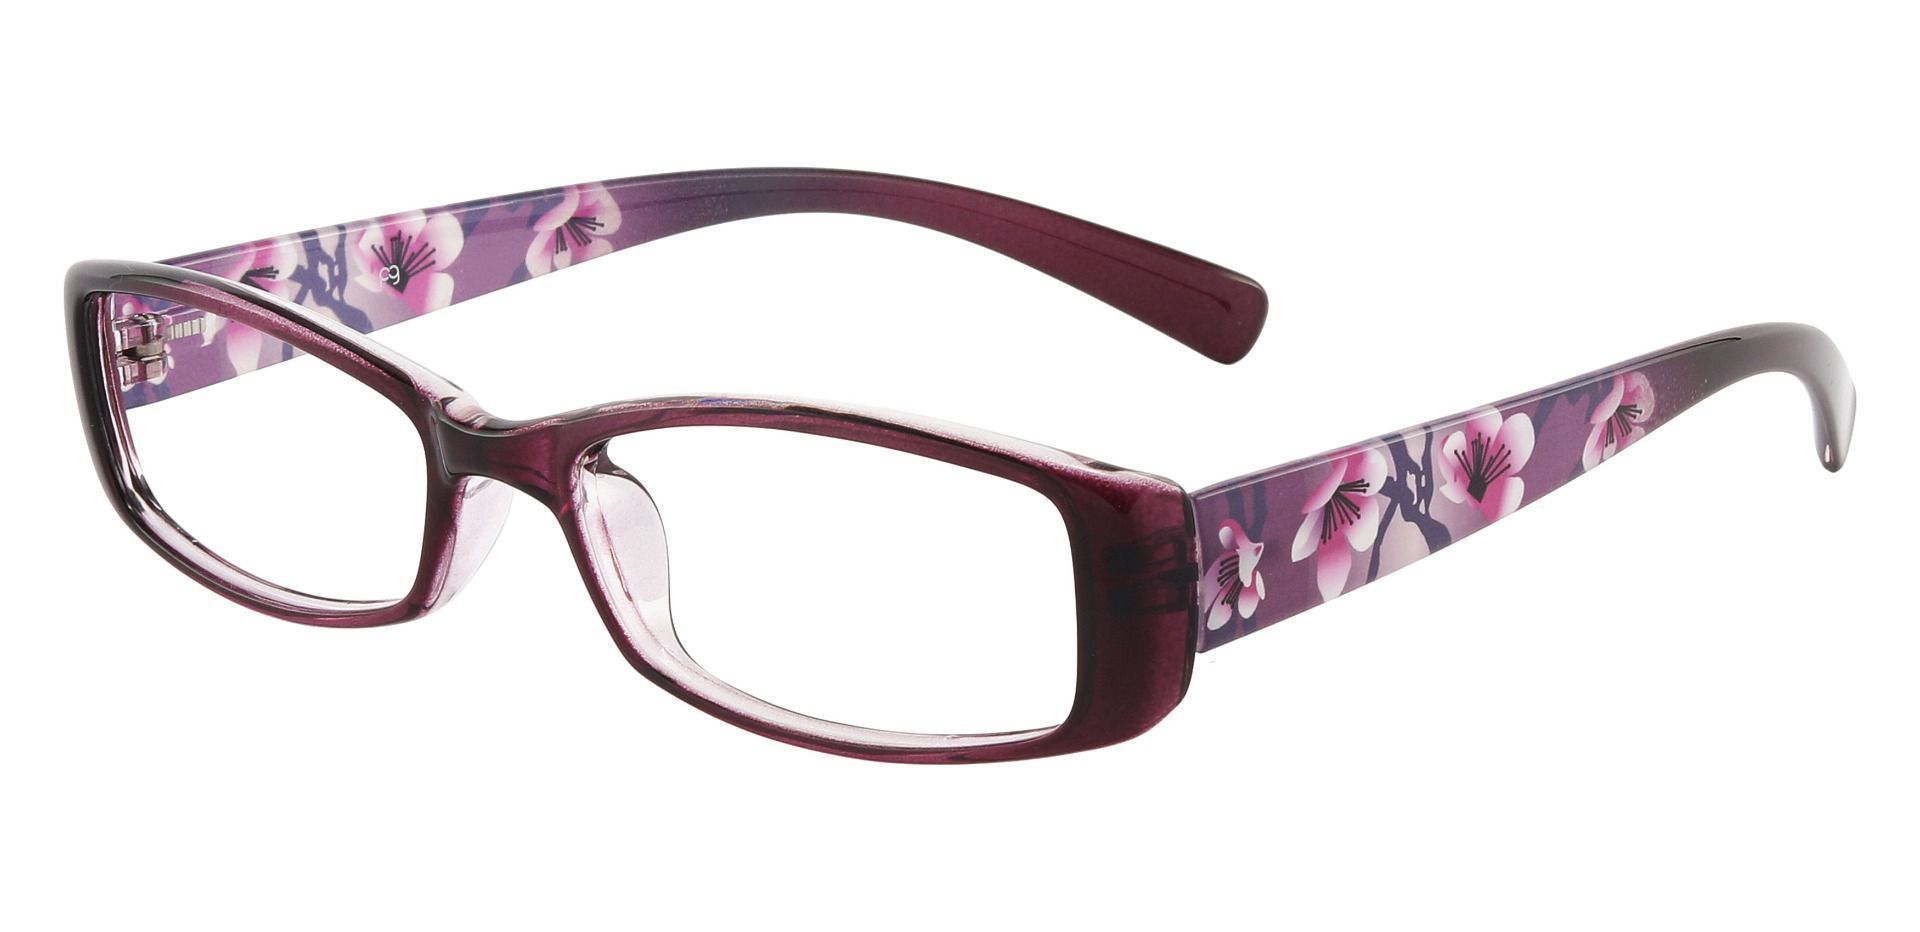 Medora Rectangle Reading Glasses - Purple/Floral Temples, Women's  Eyeglasses